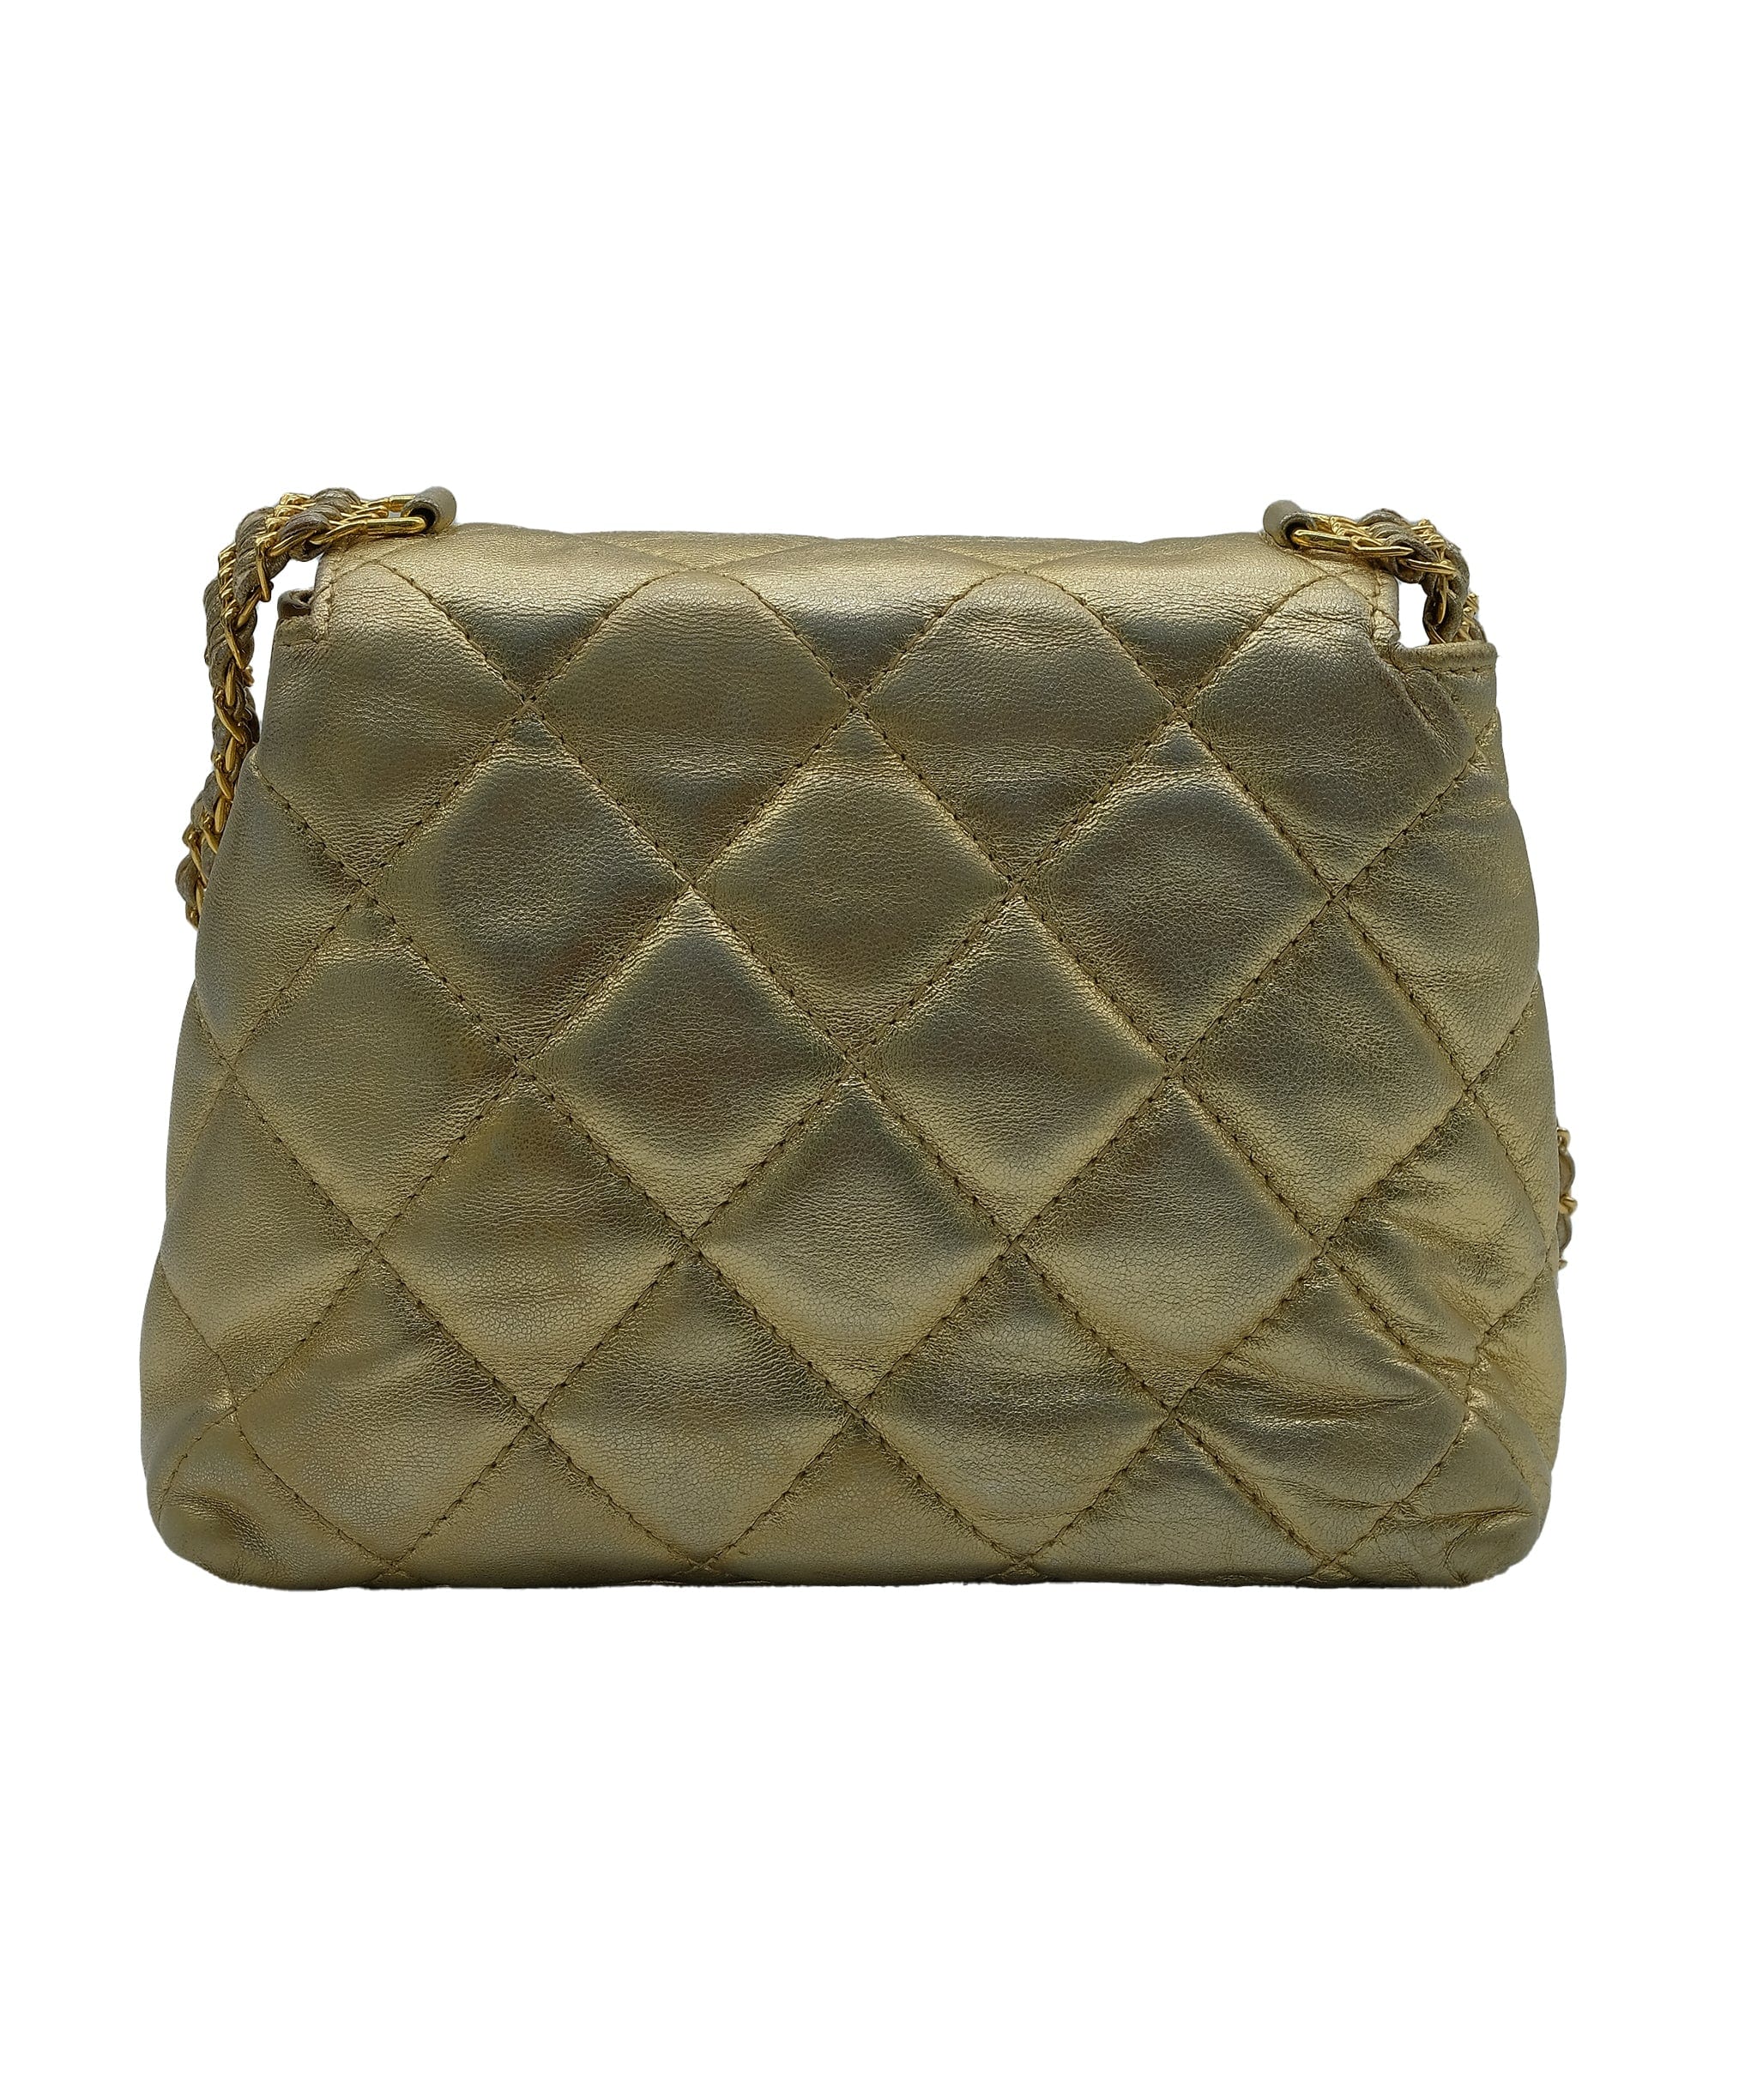 Louis Vuitton Chanel Gold Chain Bag AVC1567